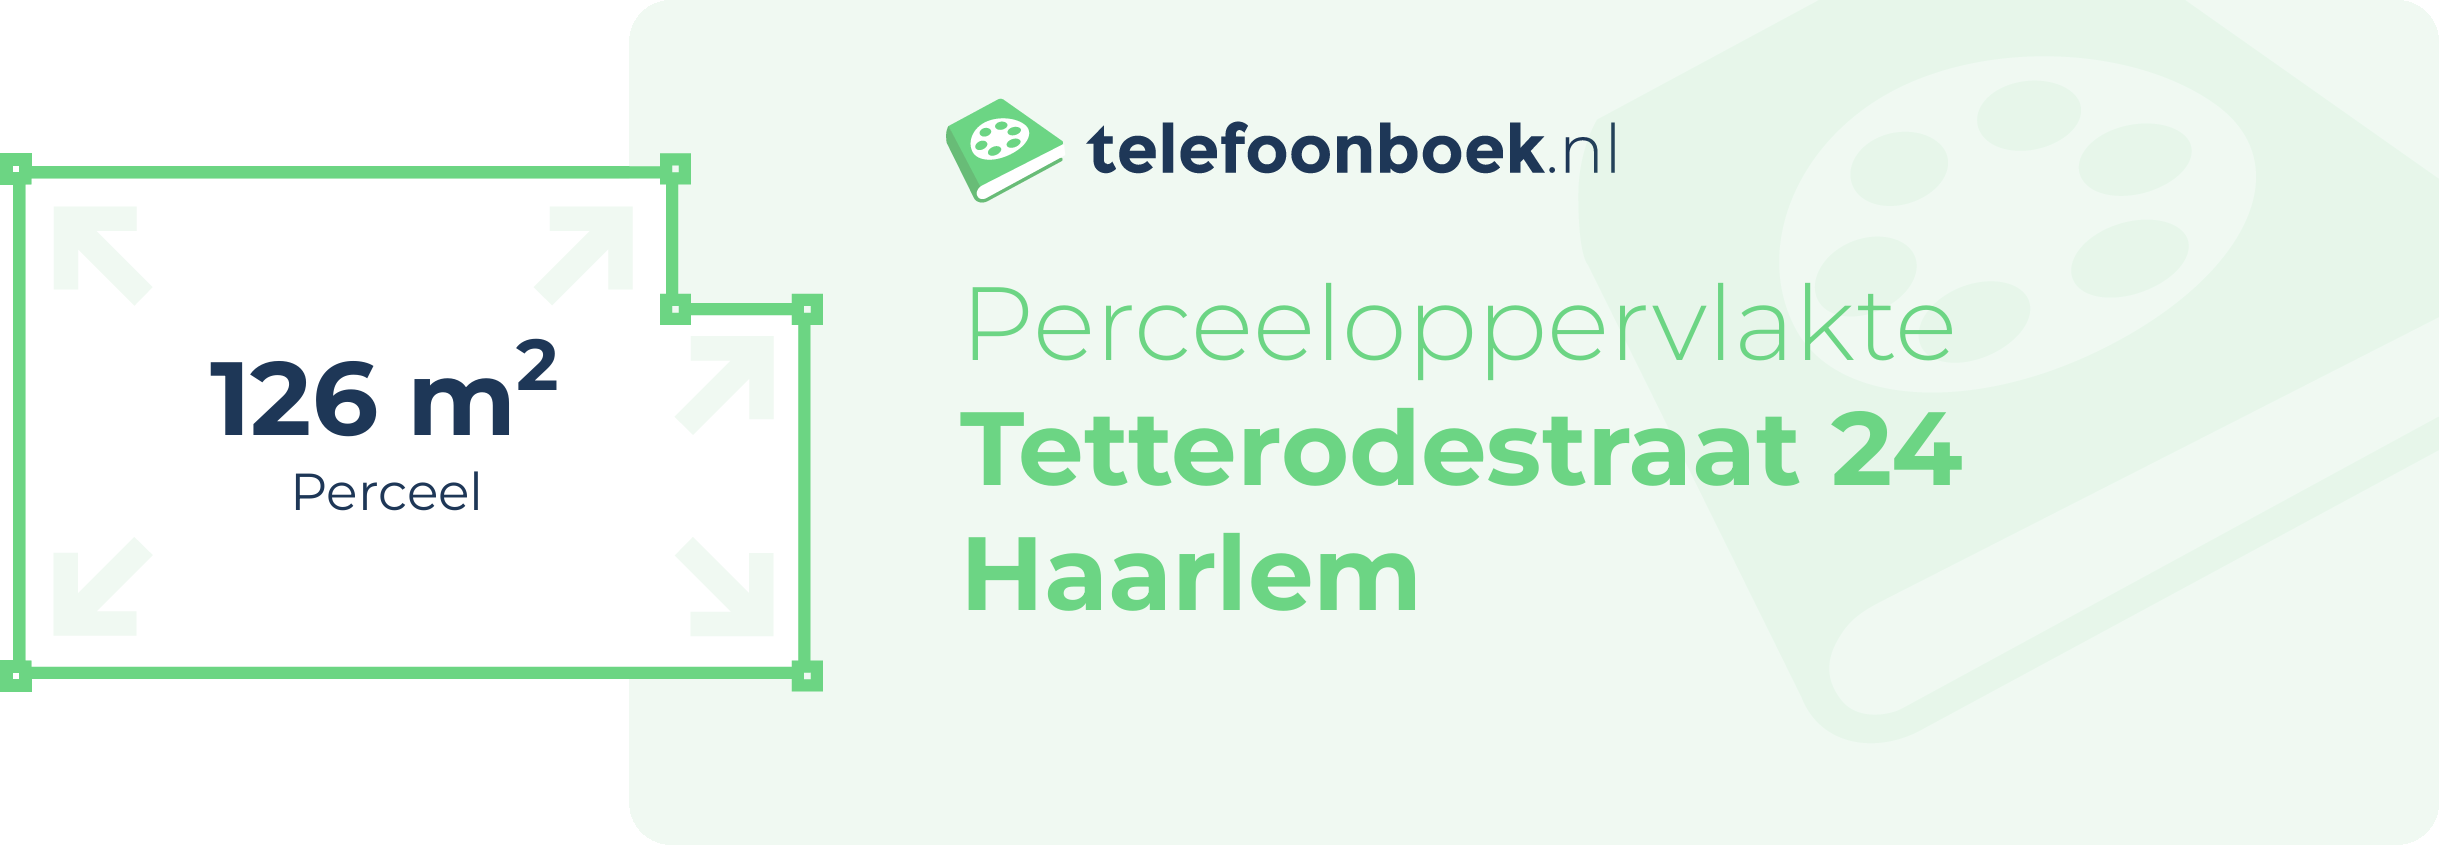 Perceeloppervlakte Tetterodestraat 24 Haarlem